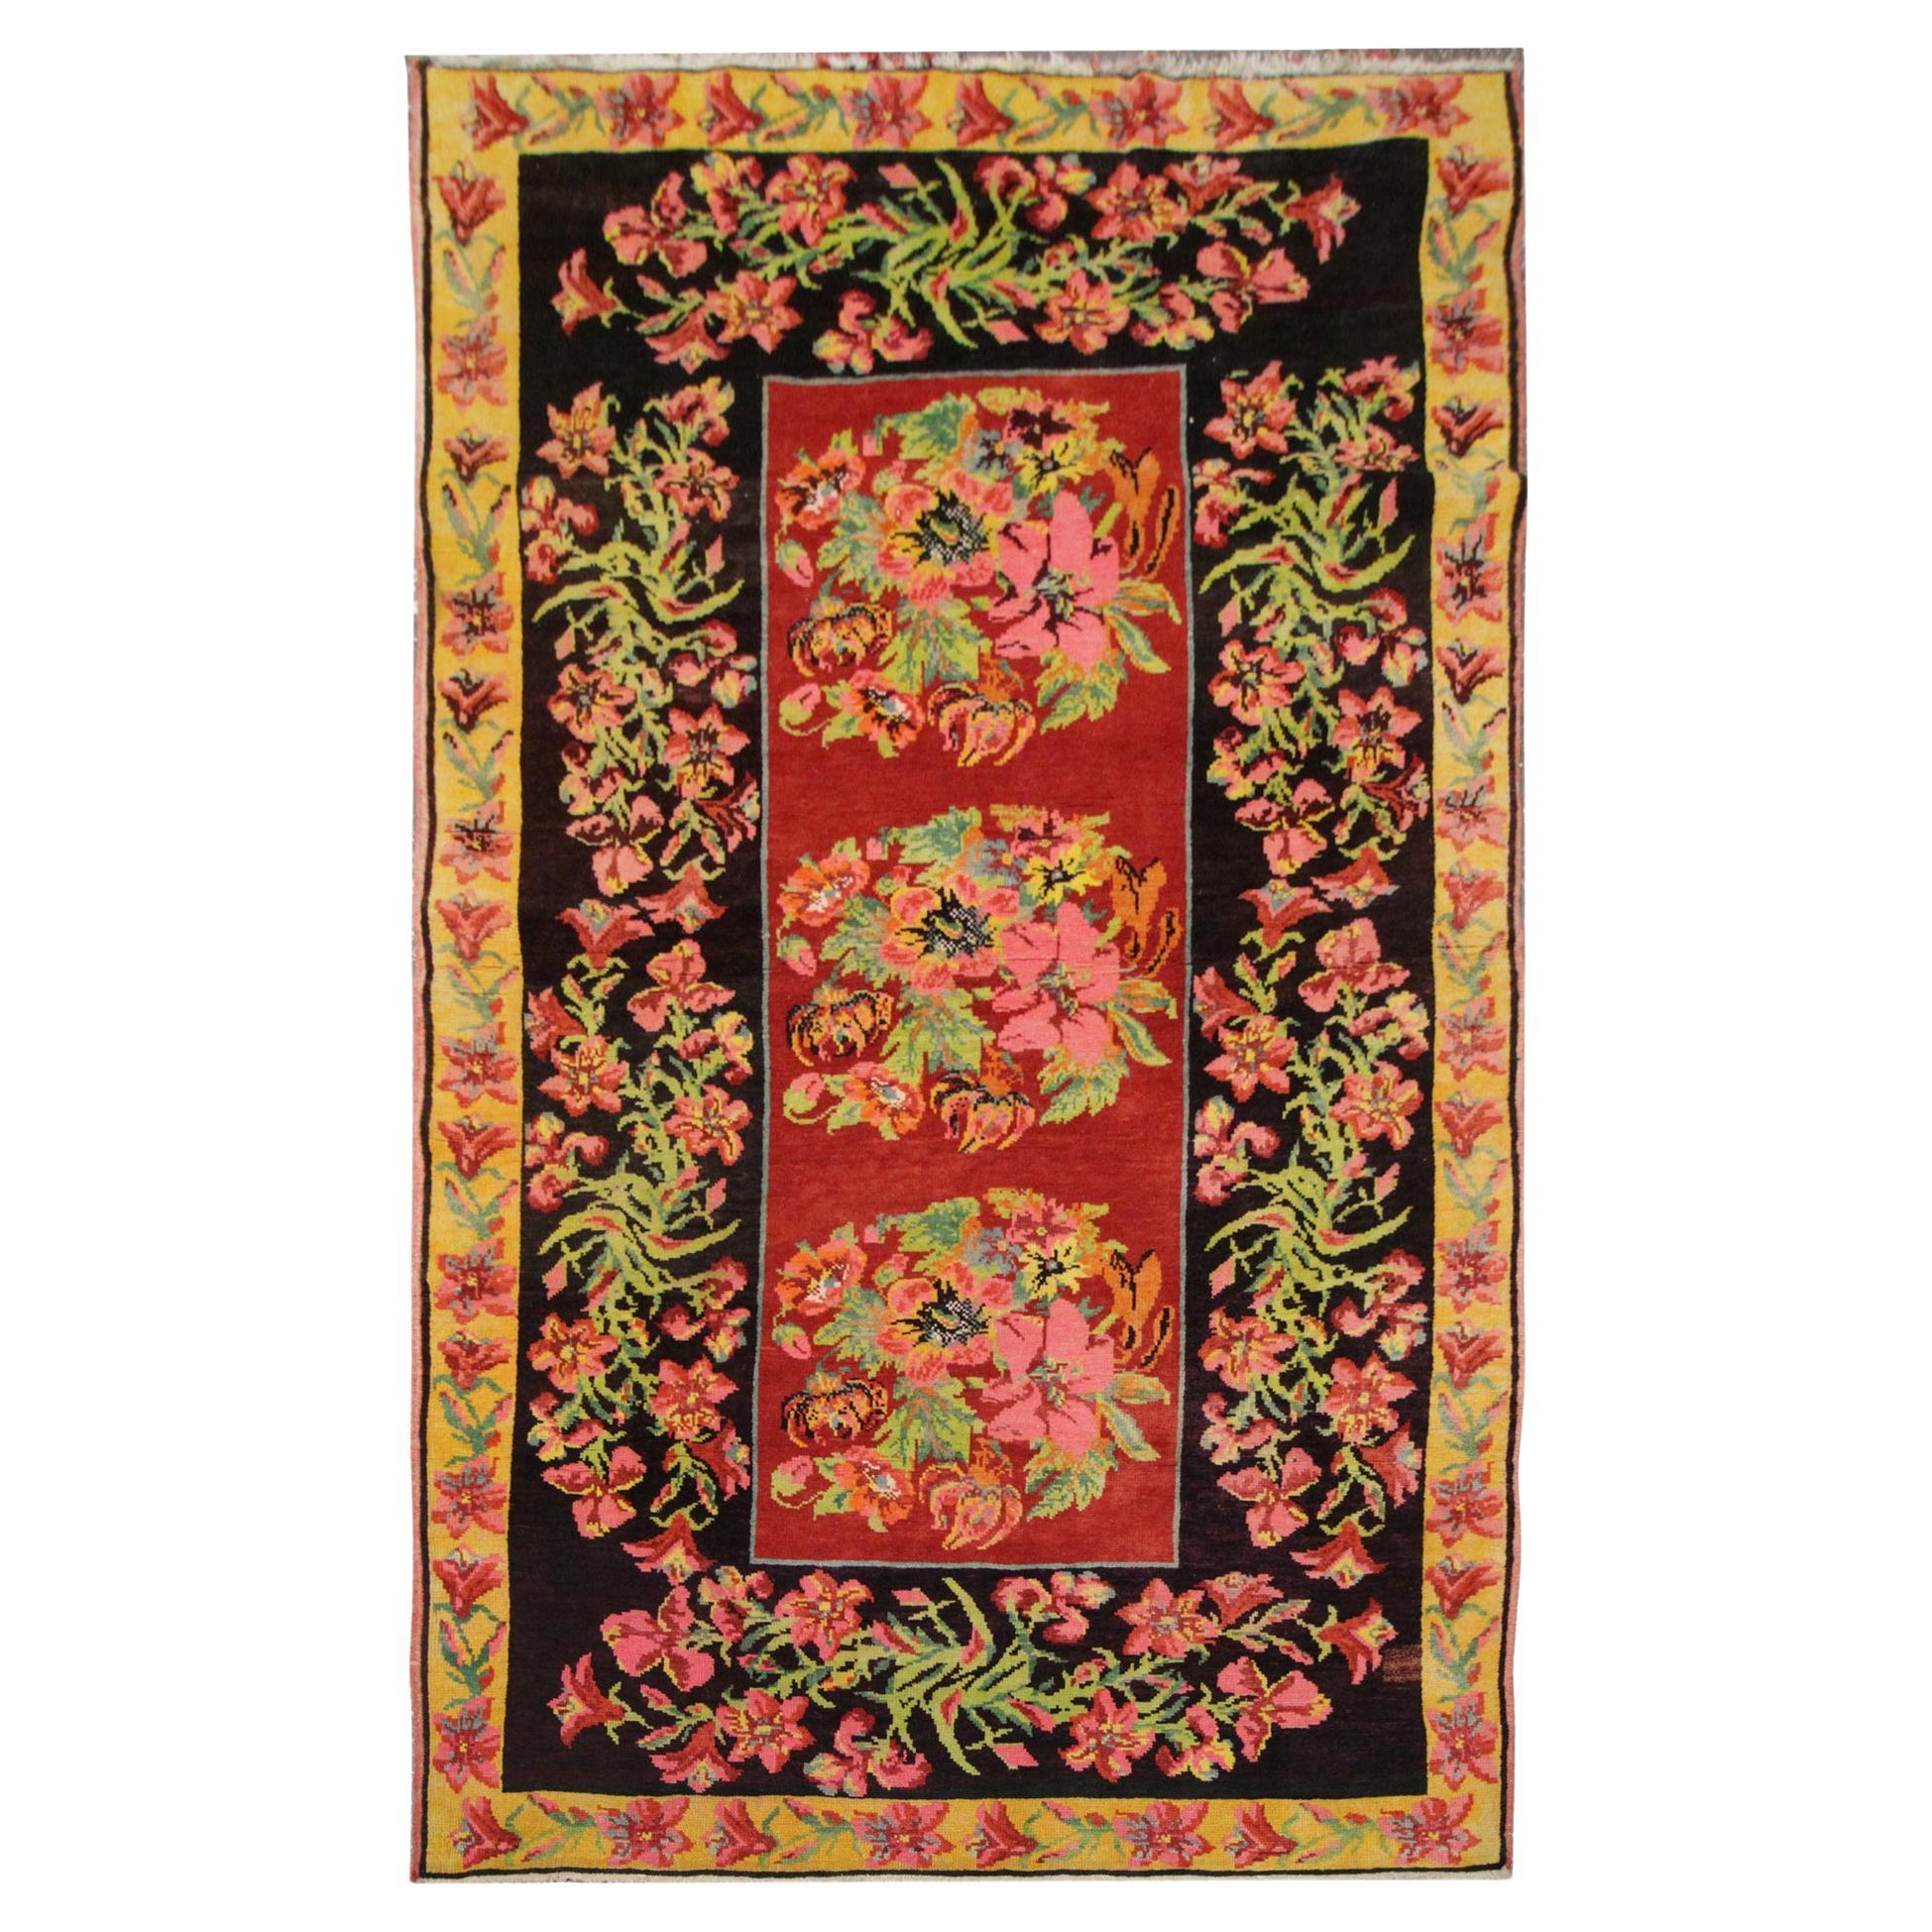 Tapis ancien à motifs floraux, tapis artisanal tissé à la main Tapis de salon oriental 